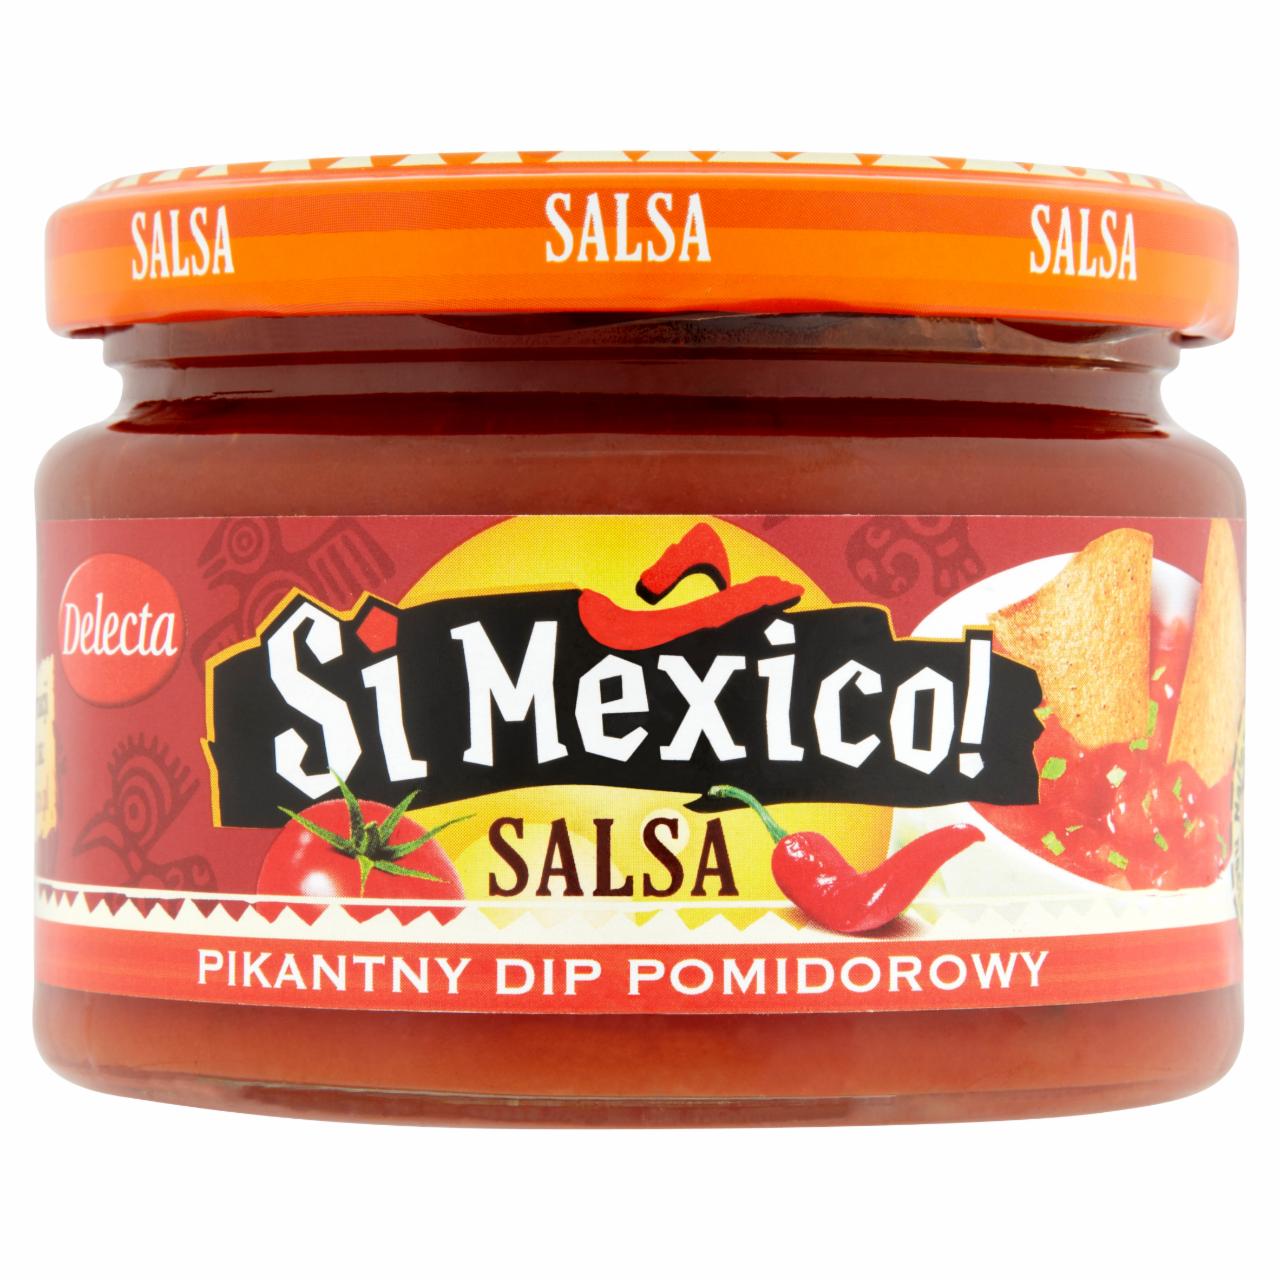 Zdjęcia - Delecta Si Mexico! Salsa Pikantny dip pomidorowy 260 g